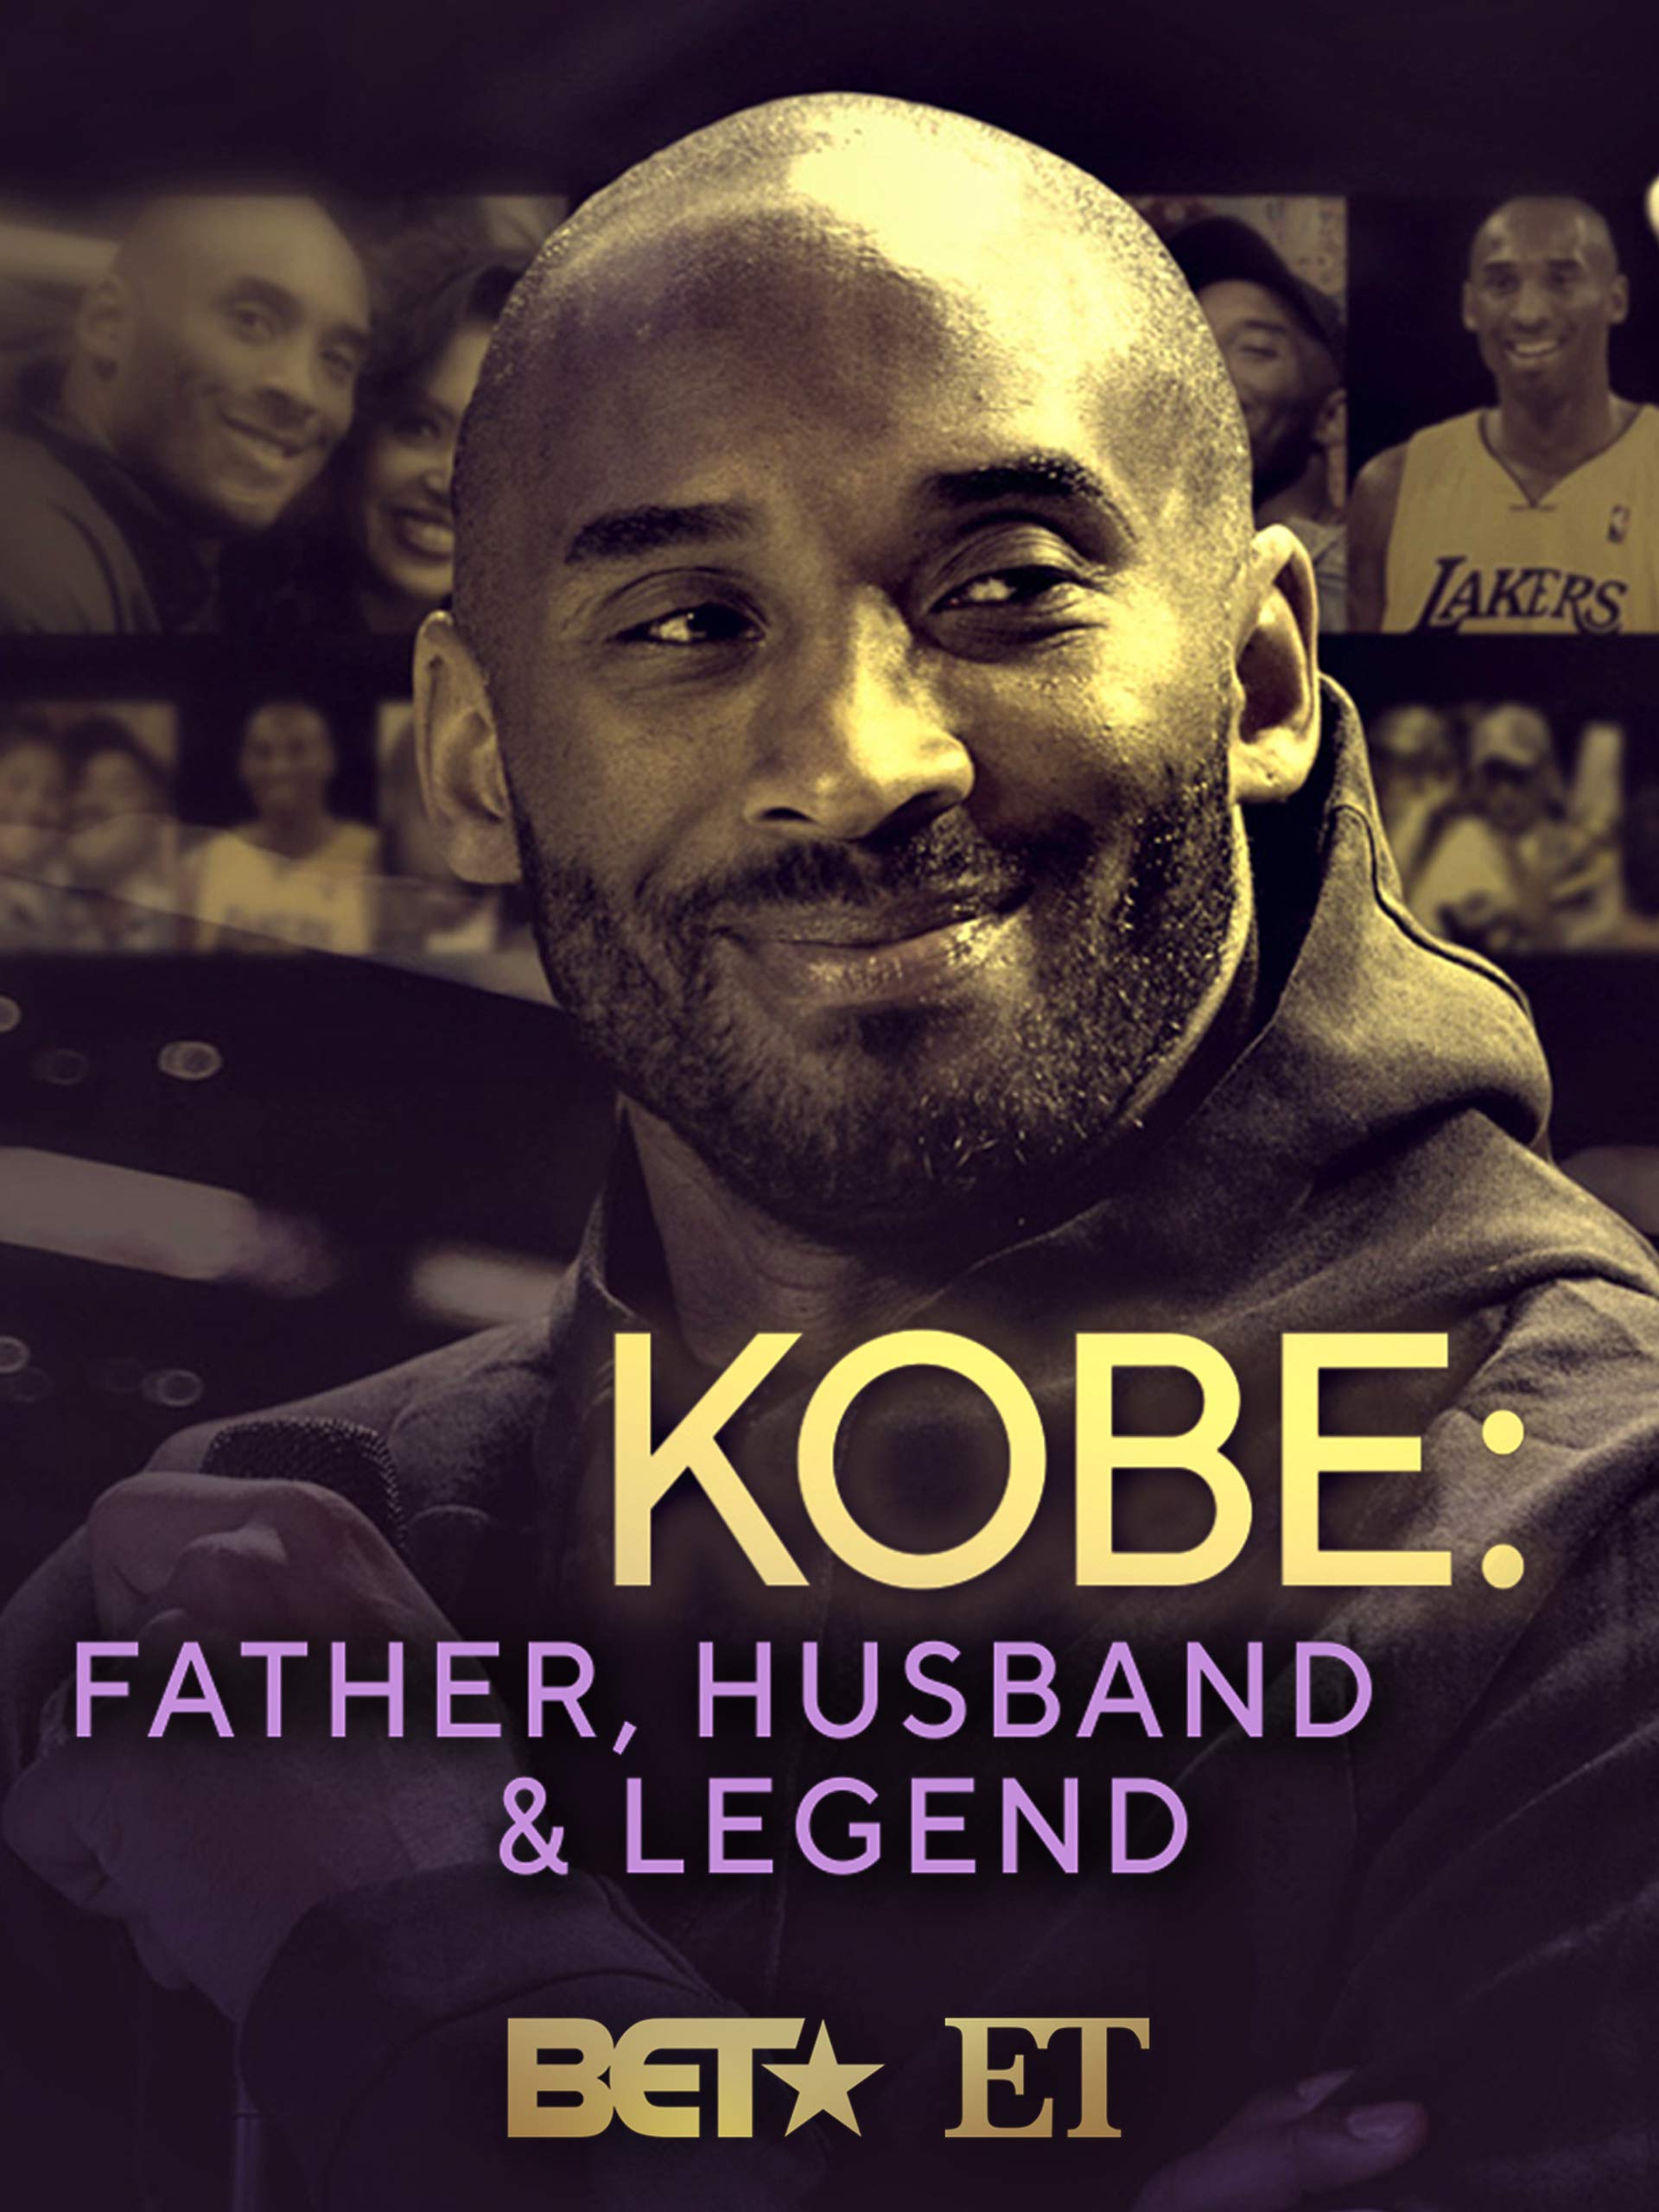 The Black Mamba Kobe Bryant documentaries, Kobe Father, Husband, Legend